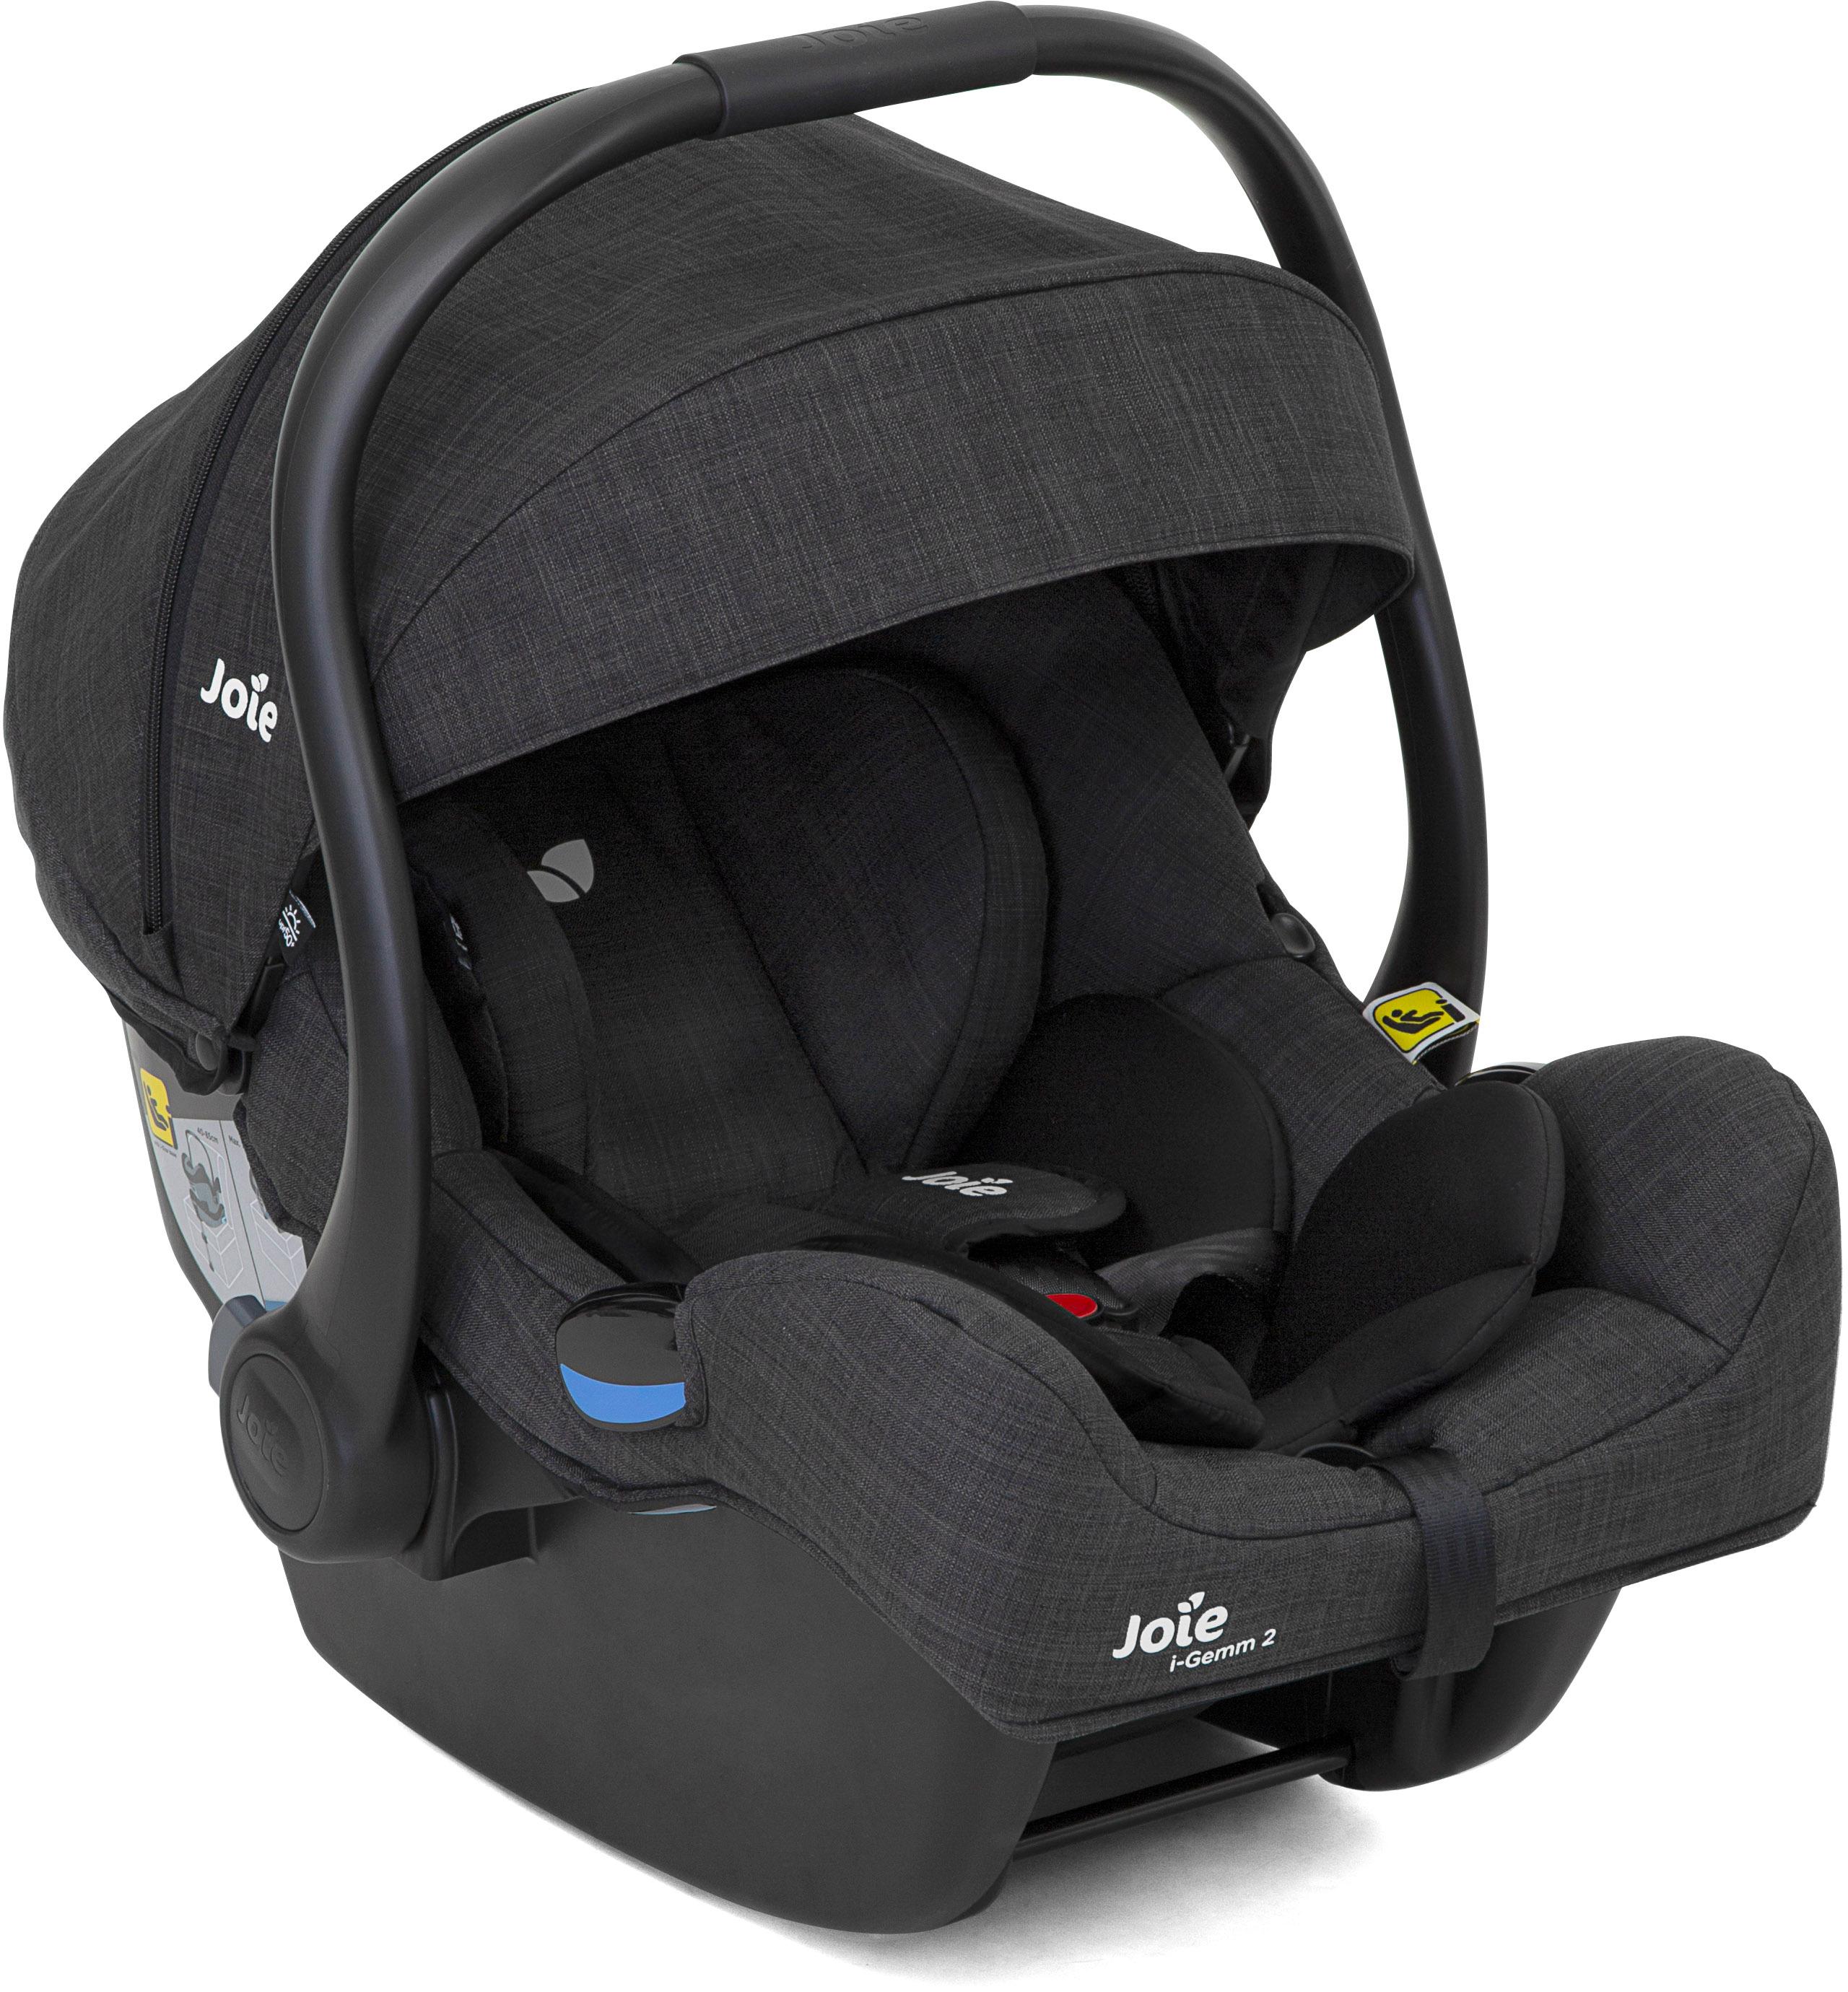 Joie i-Gemm Baby Car Seat - Pavement Grey